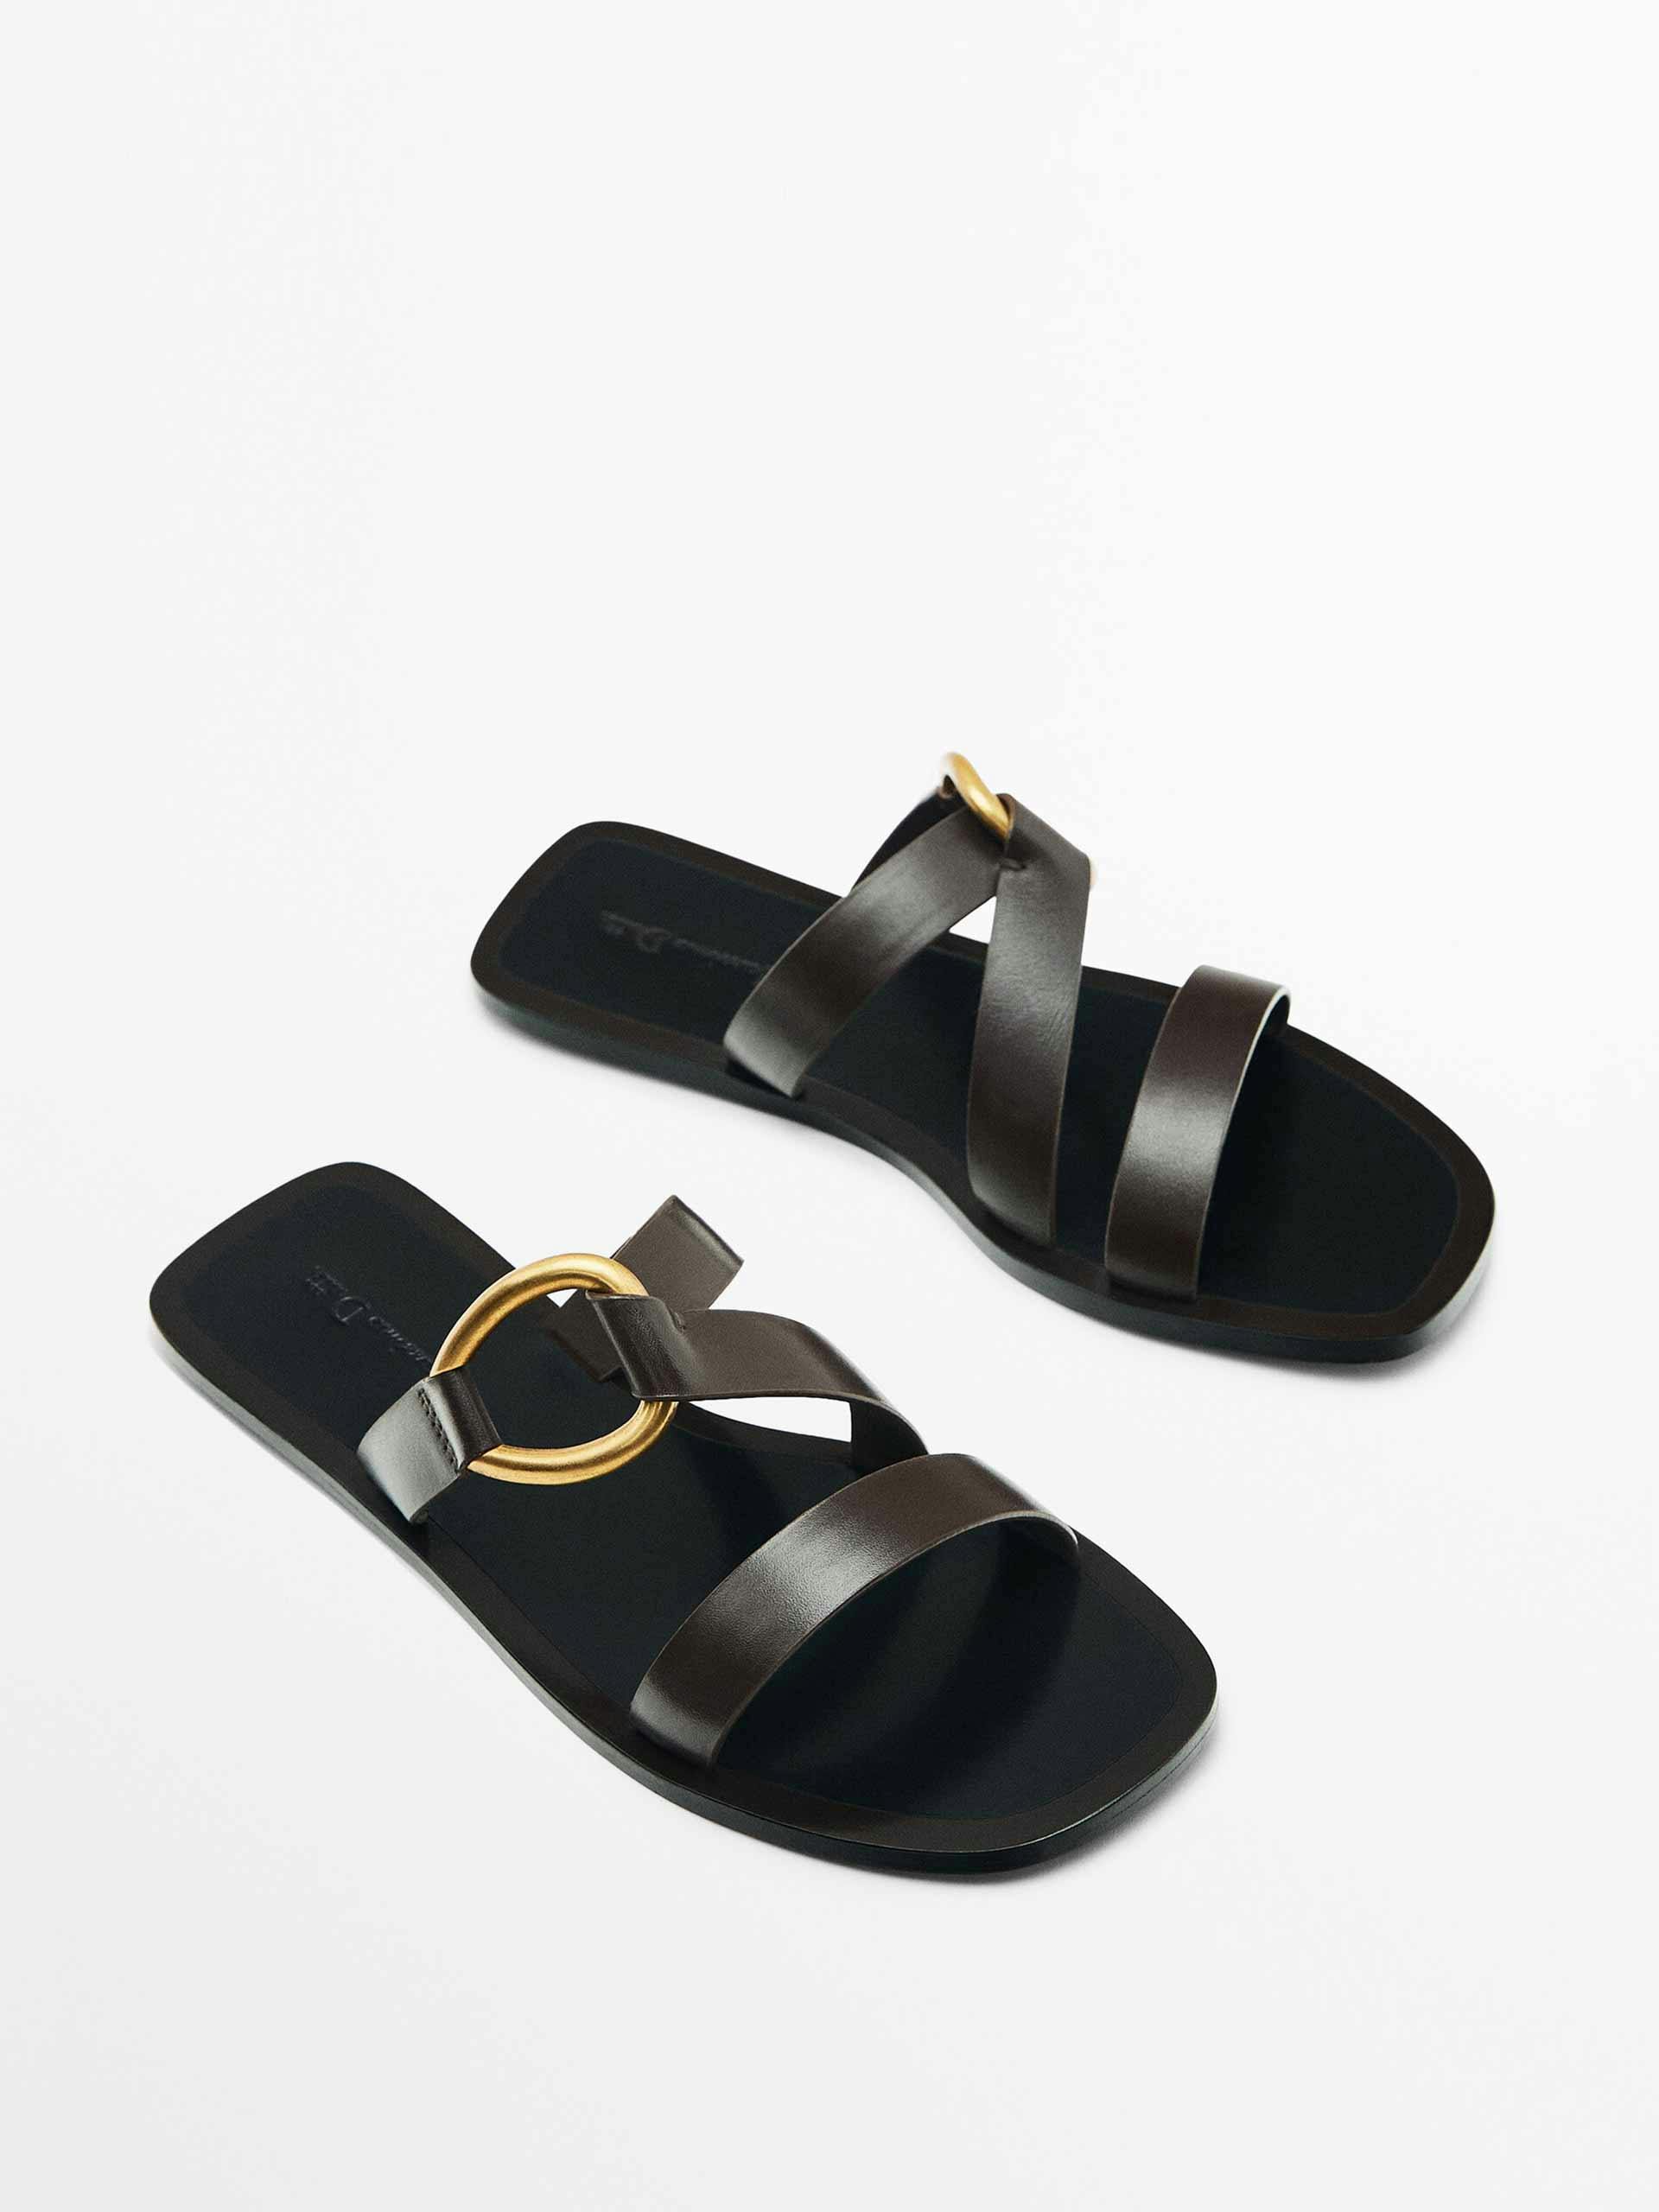 Flat slider sandals with metal ring detail